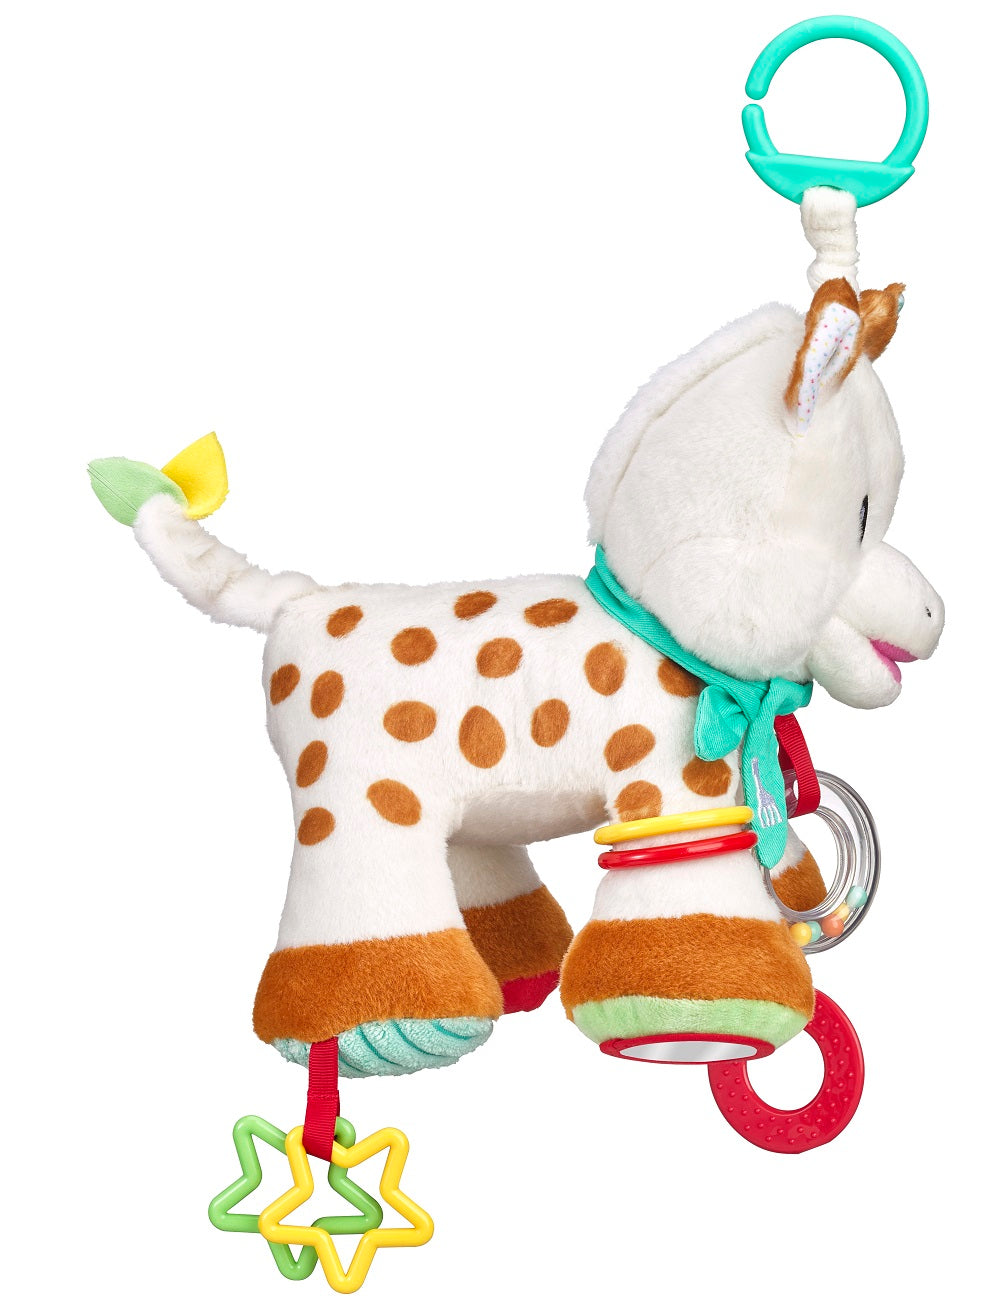 Little Giraffe - Sophie the Giraffe activity cuddly toy